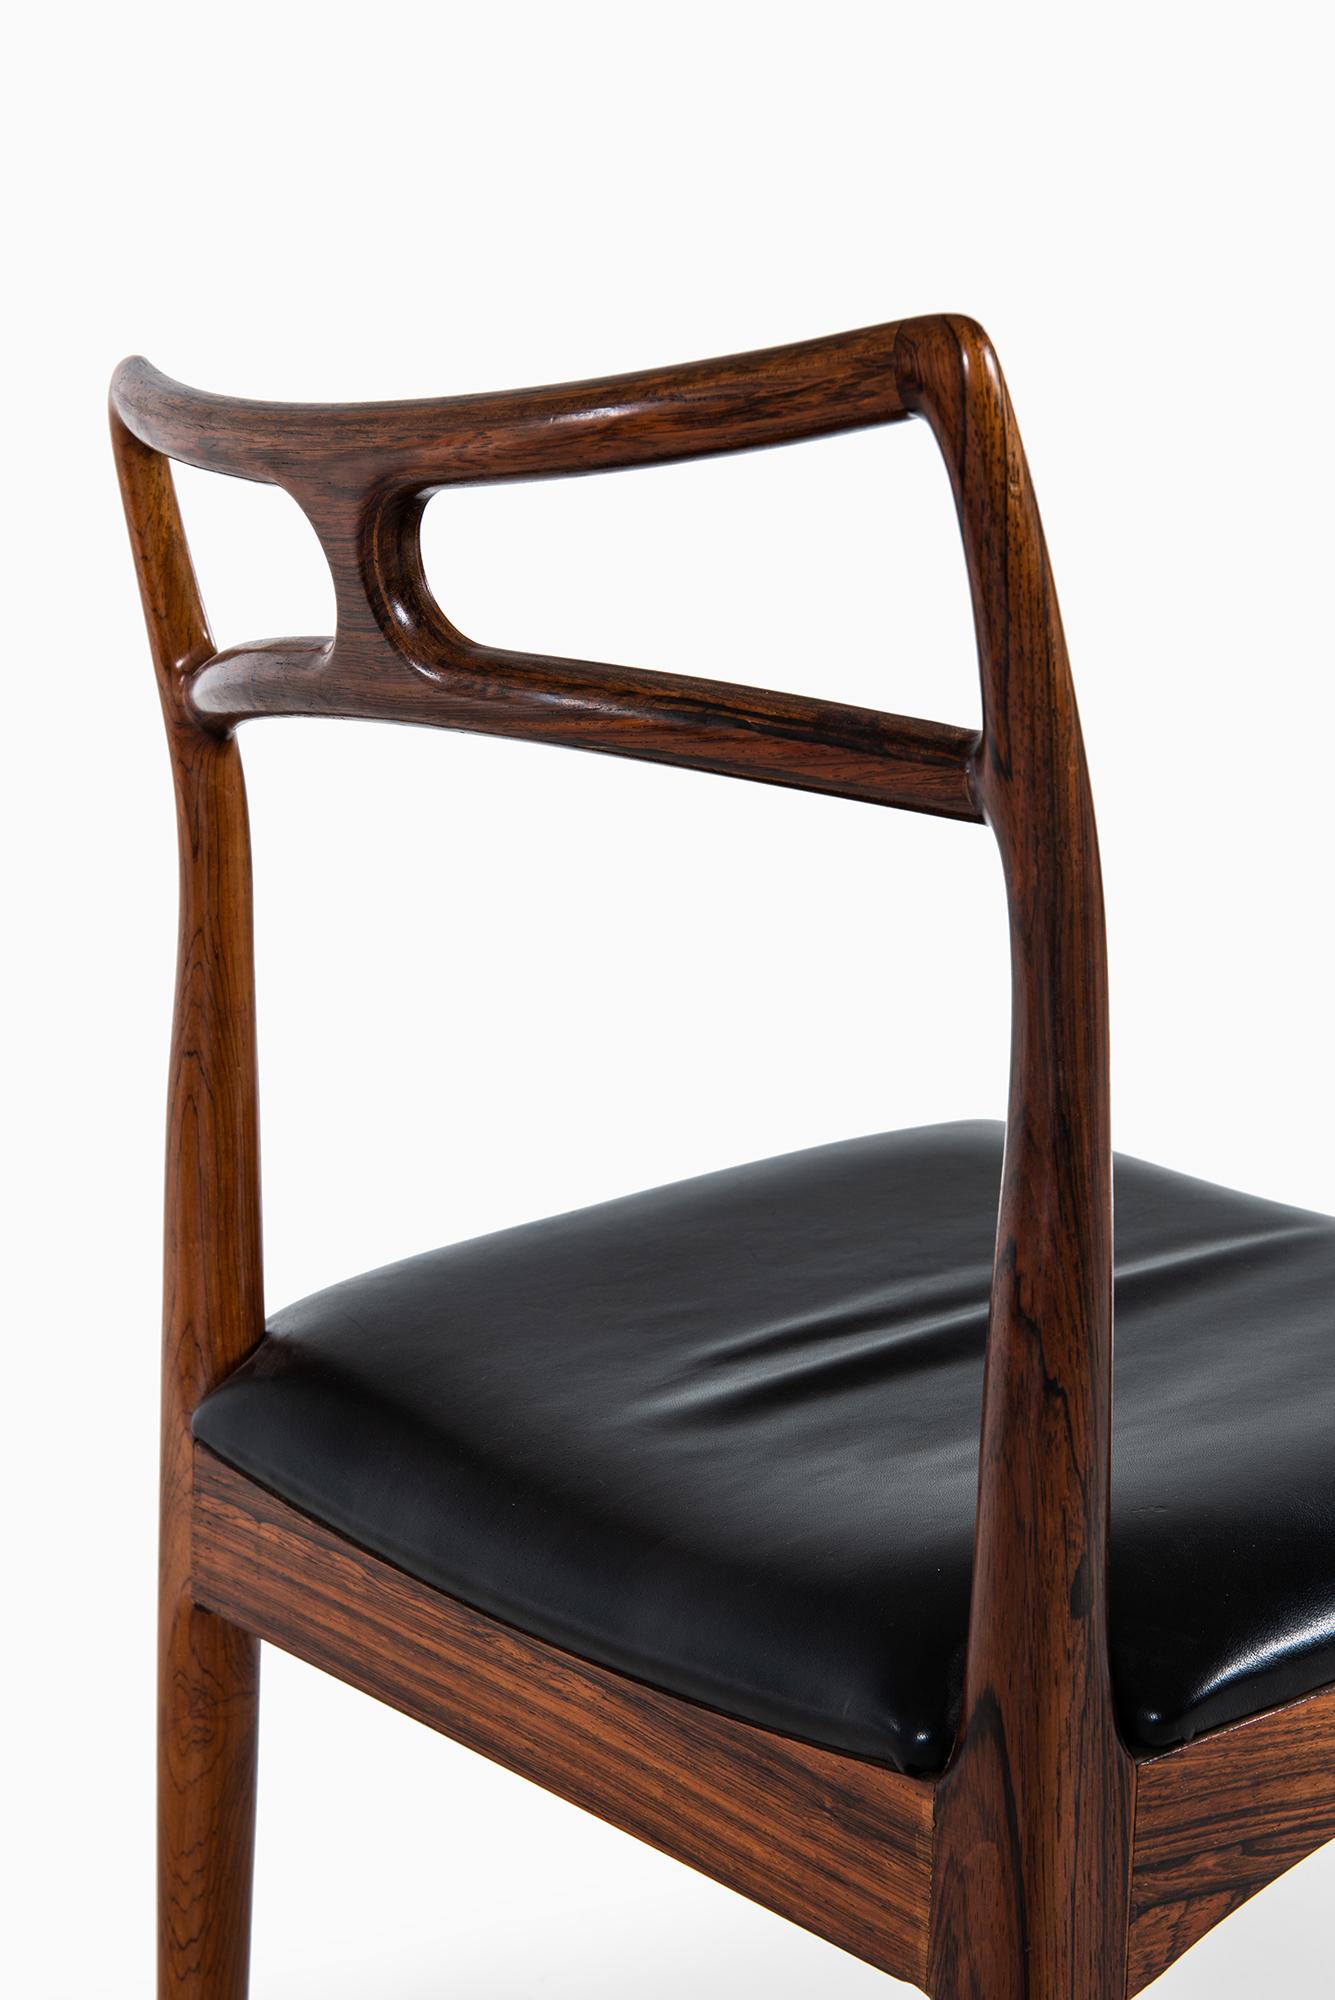 Leather Johannes Andersen Dining Chairs Model 94 by Chr. Linnebergs Møbelfabrik